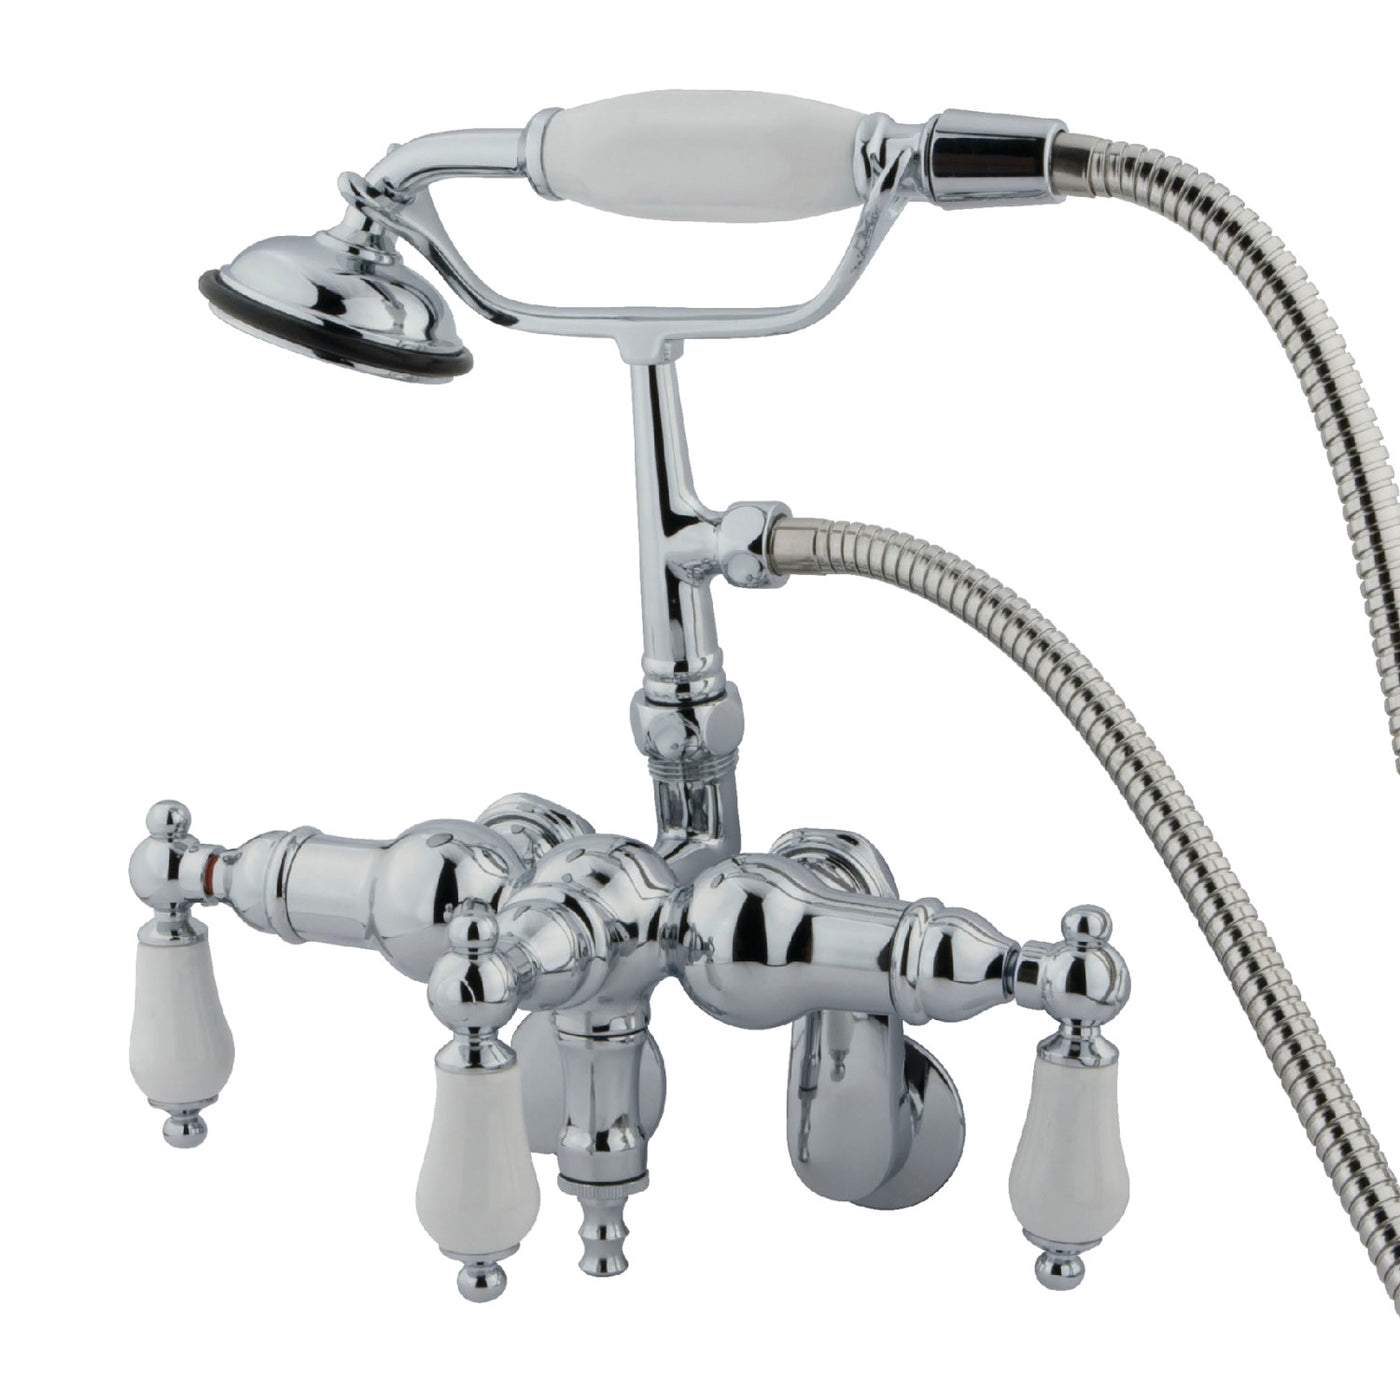 Elements of Design DT4201PL Adjustable Center Wall Mount Tub Faucet with Hand Shower, Polished Chrome